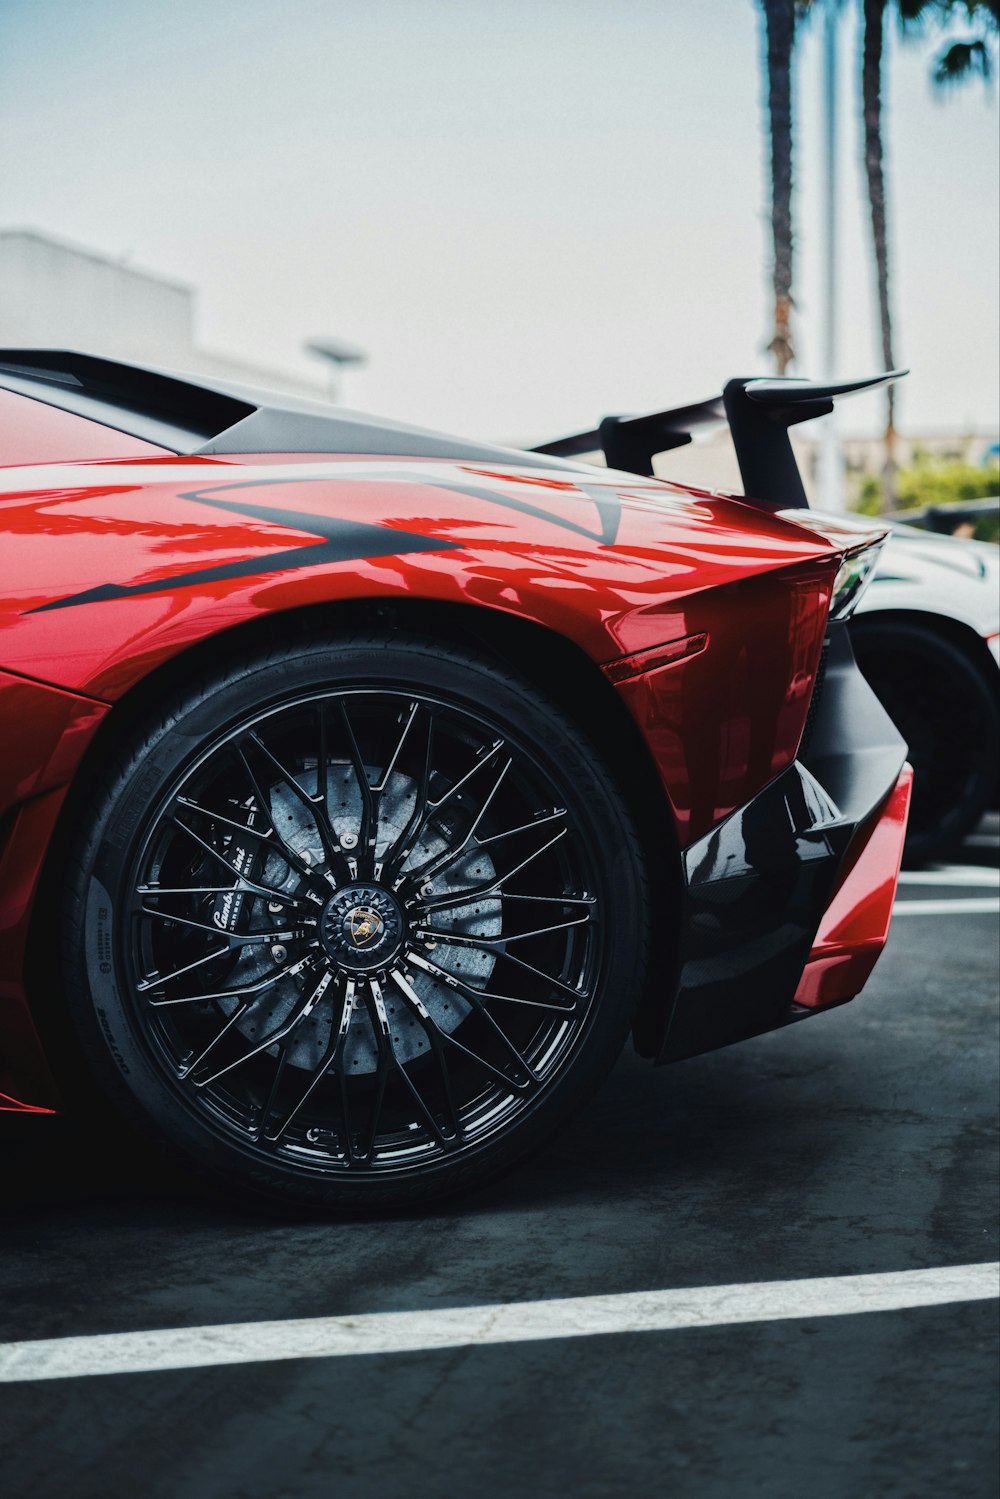 100 Lamborghini Aventador Sv Pictures Download Free